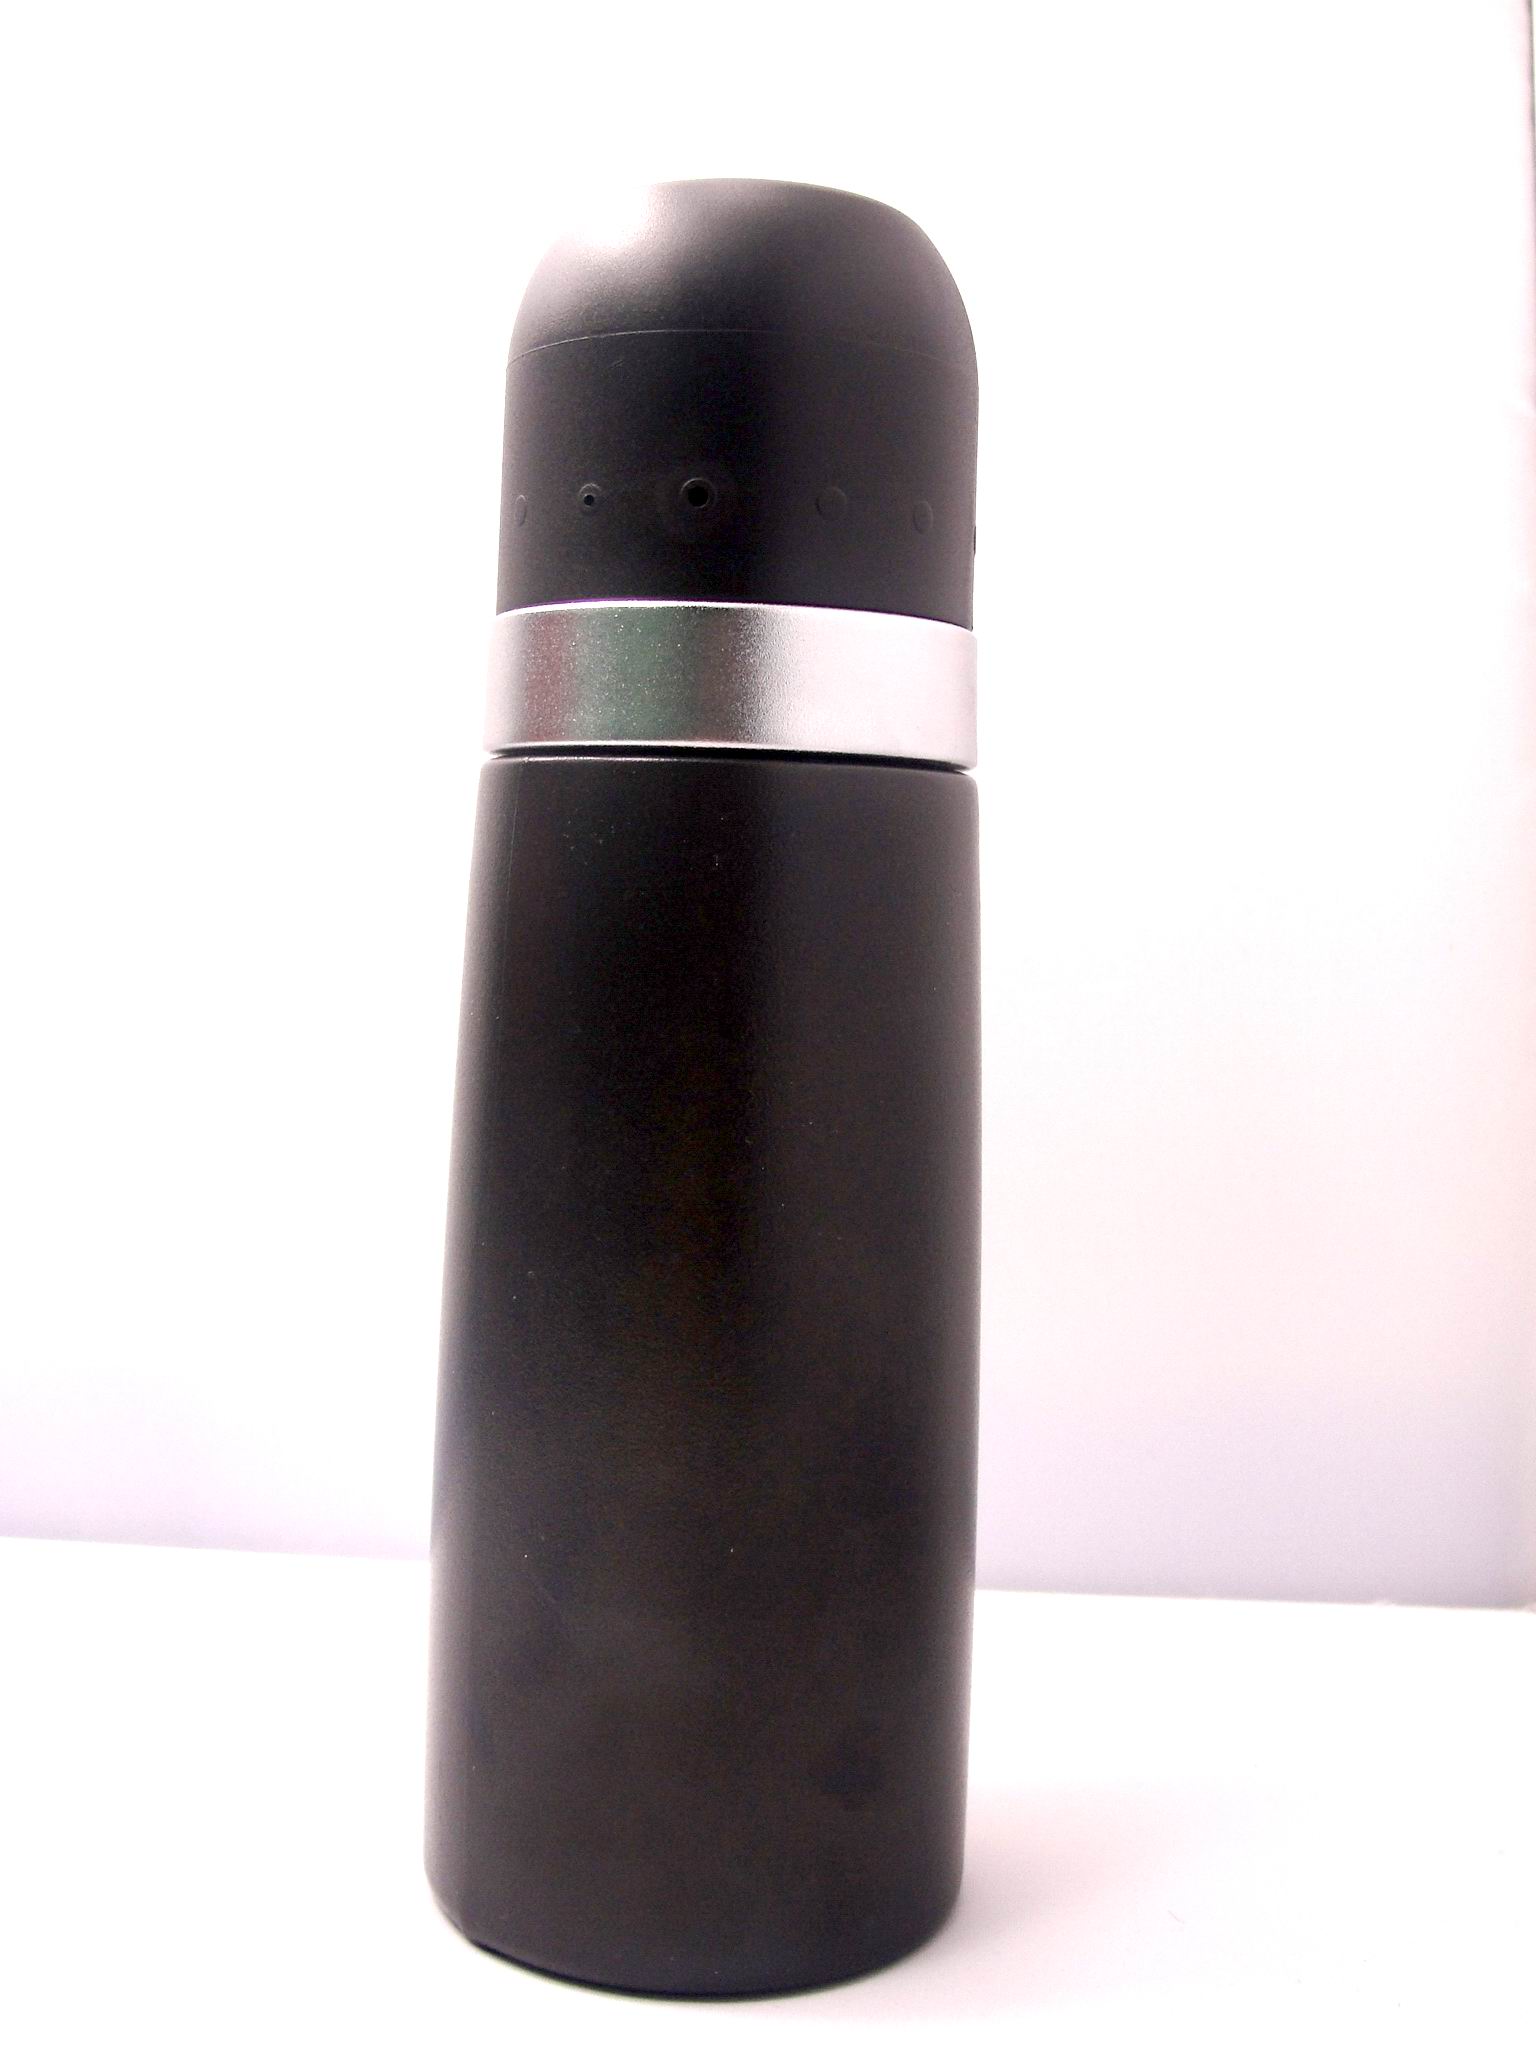 Covert HD 720P Sports Water Bottle Camera